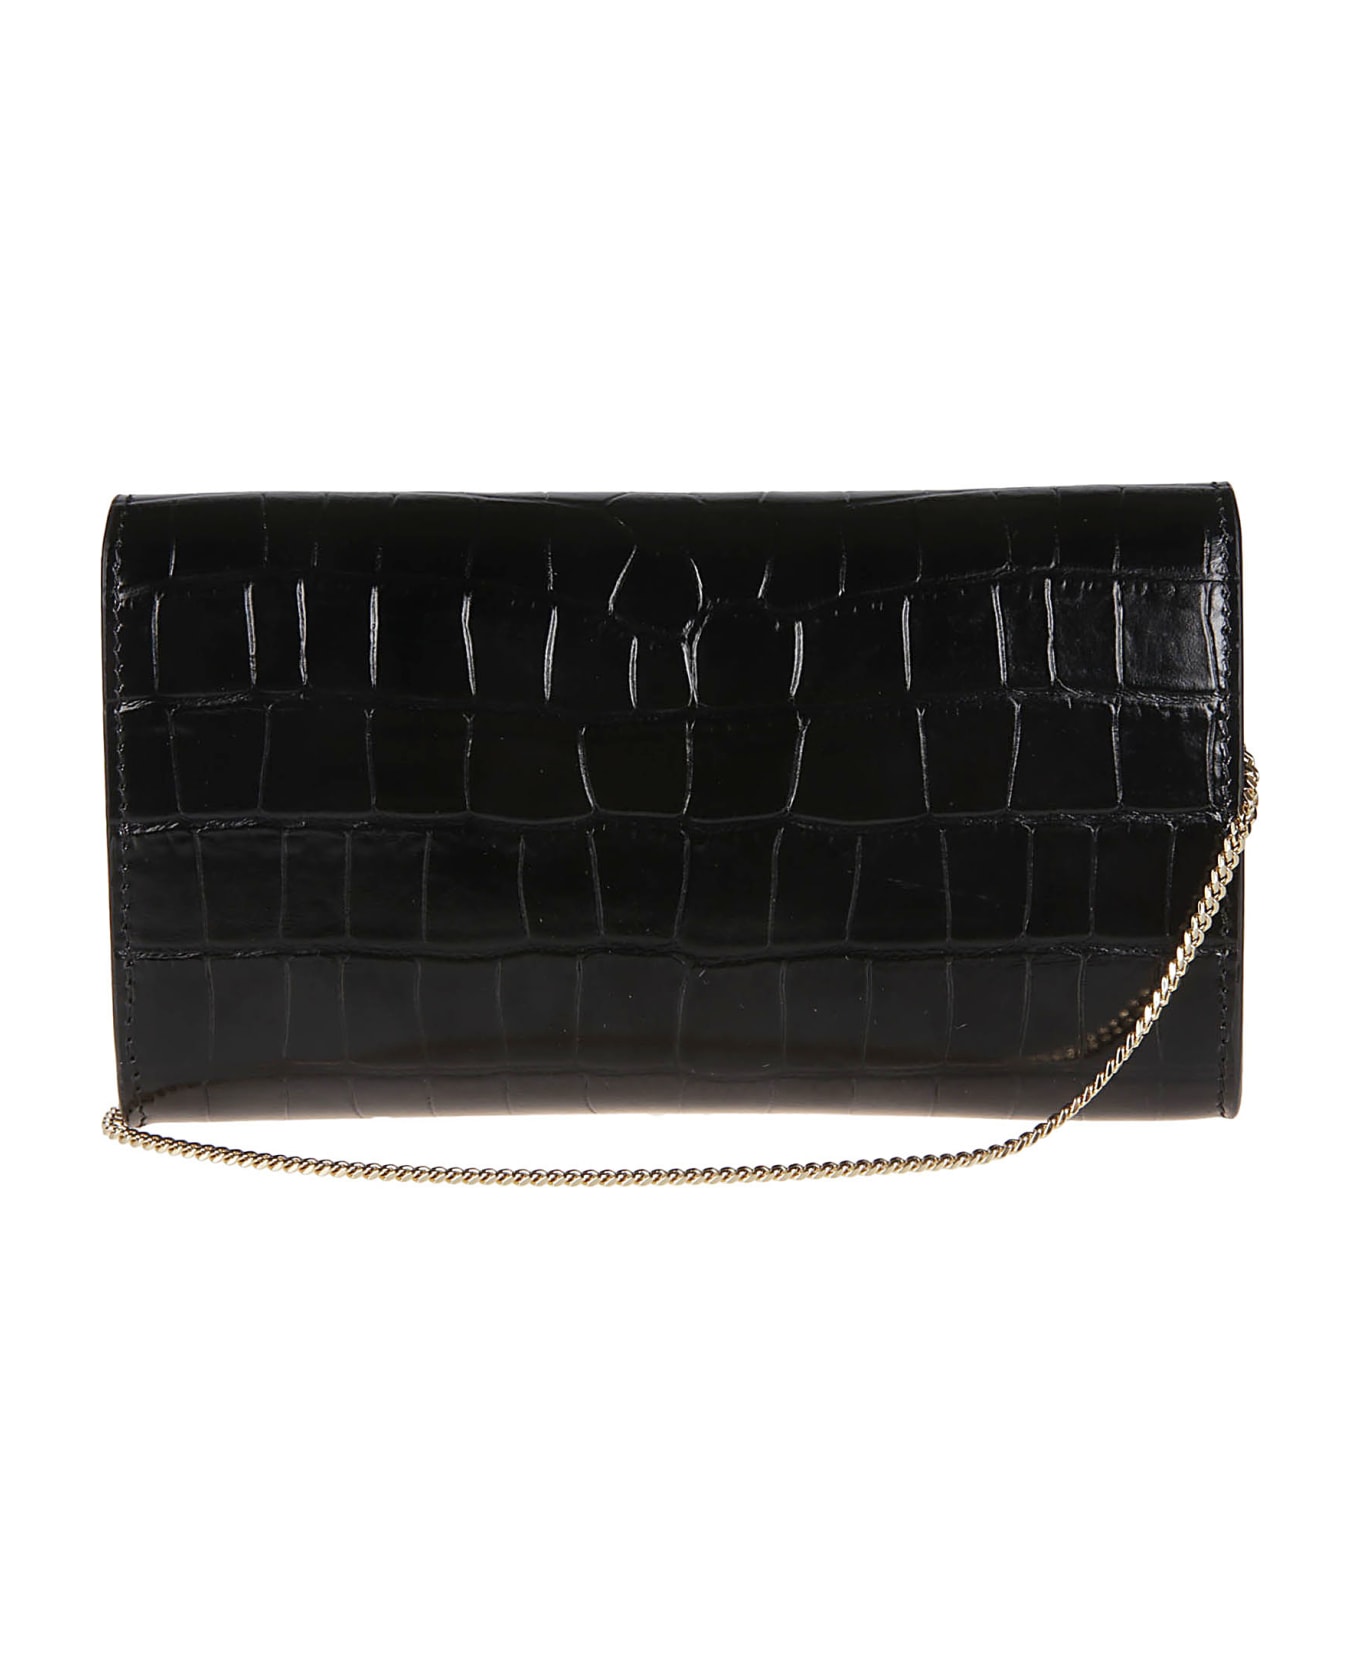 Victoria Beckham Wallet On Chain Bag - BLACK クラッチバッグ